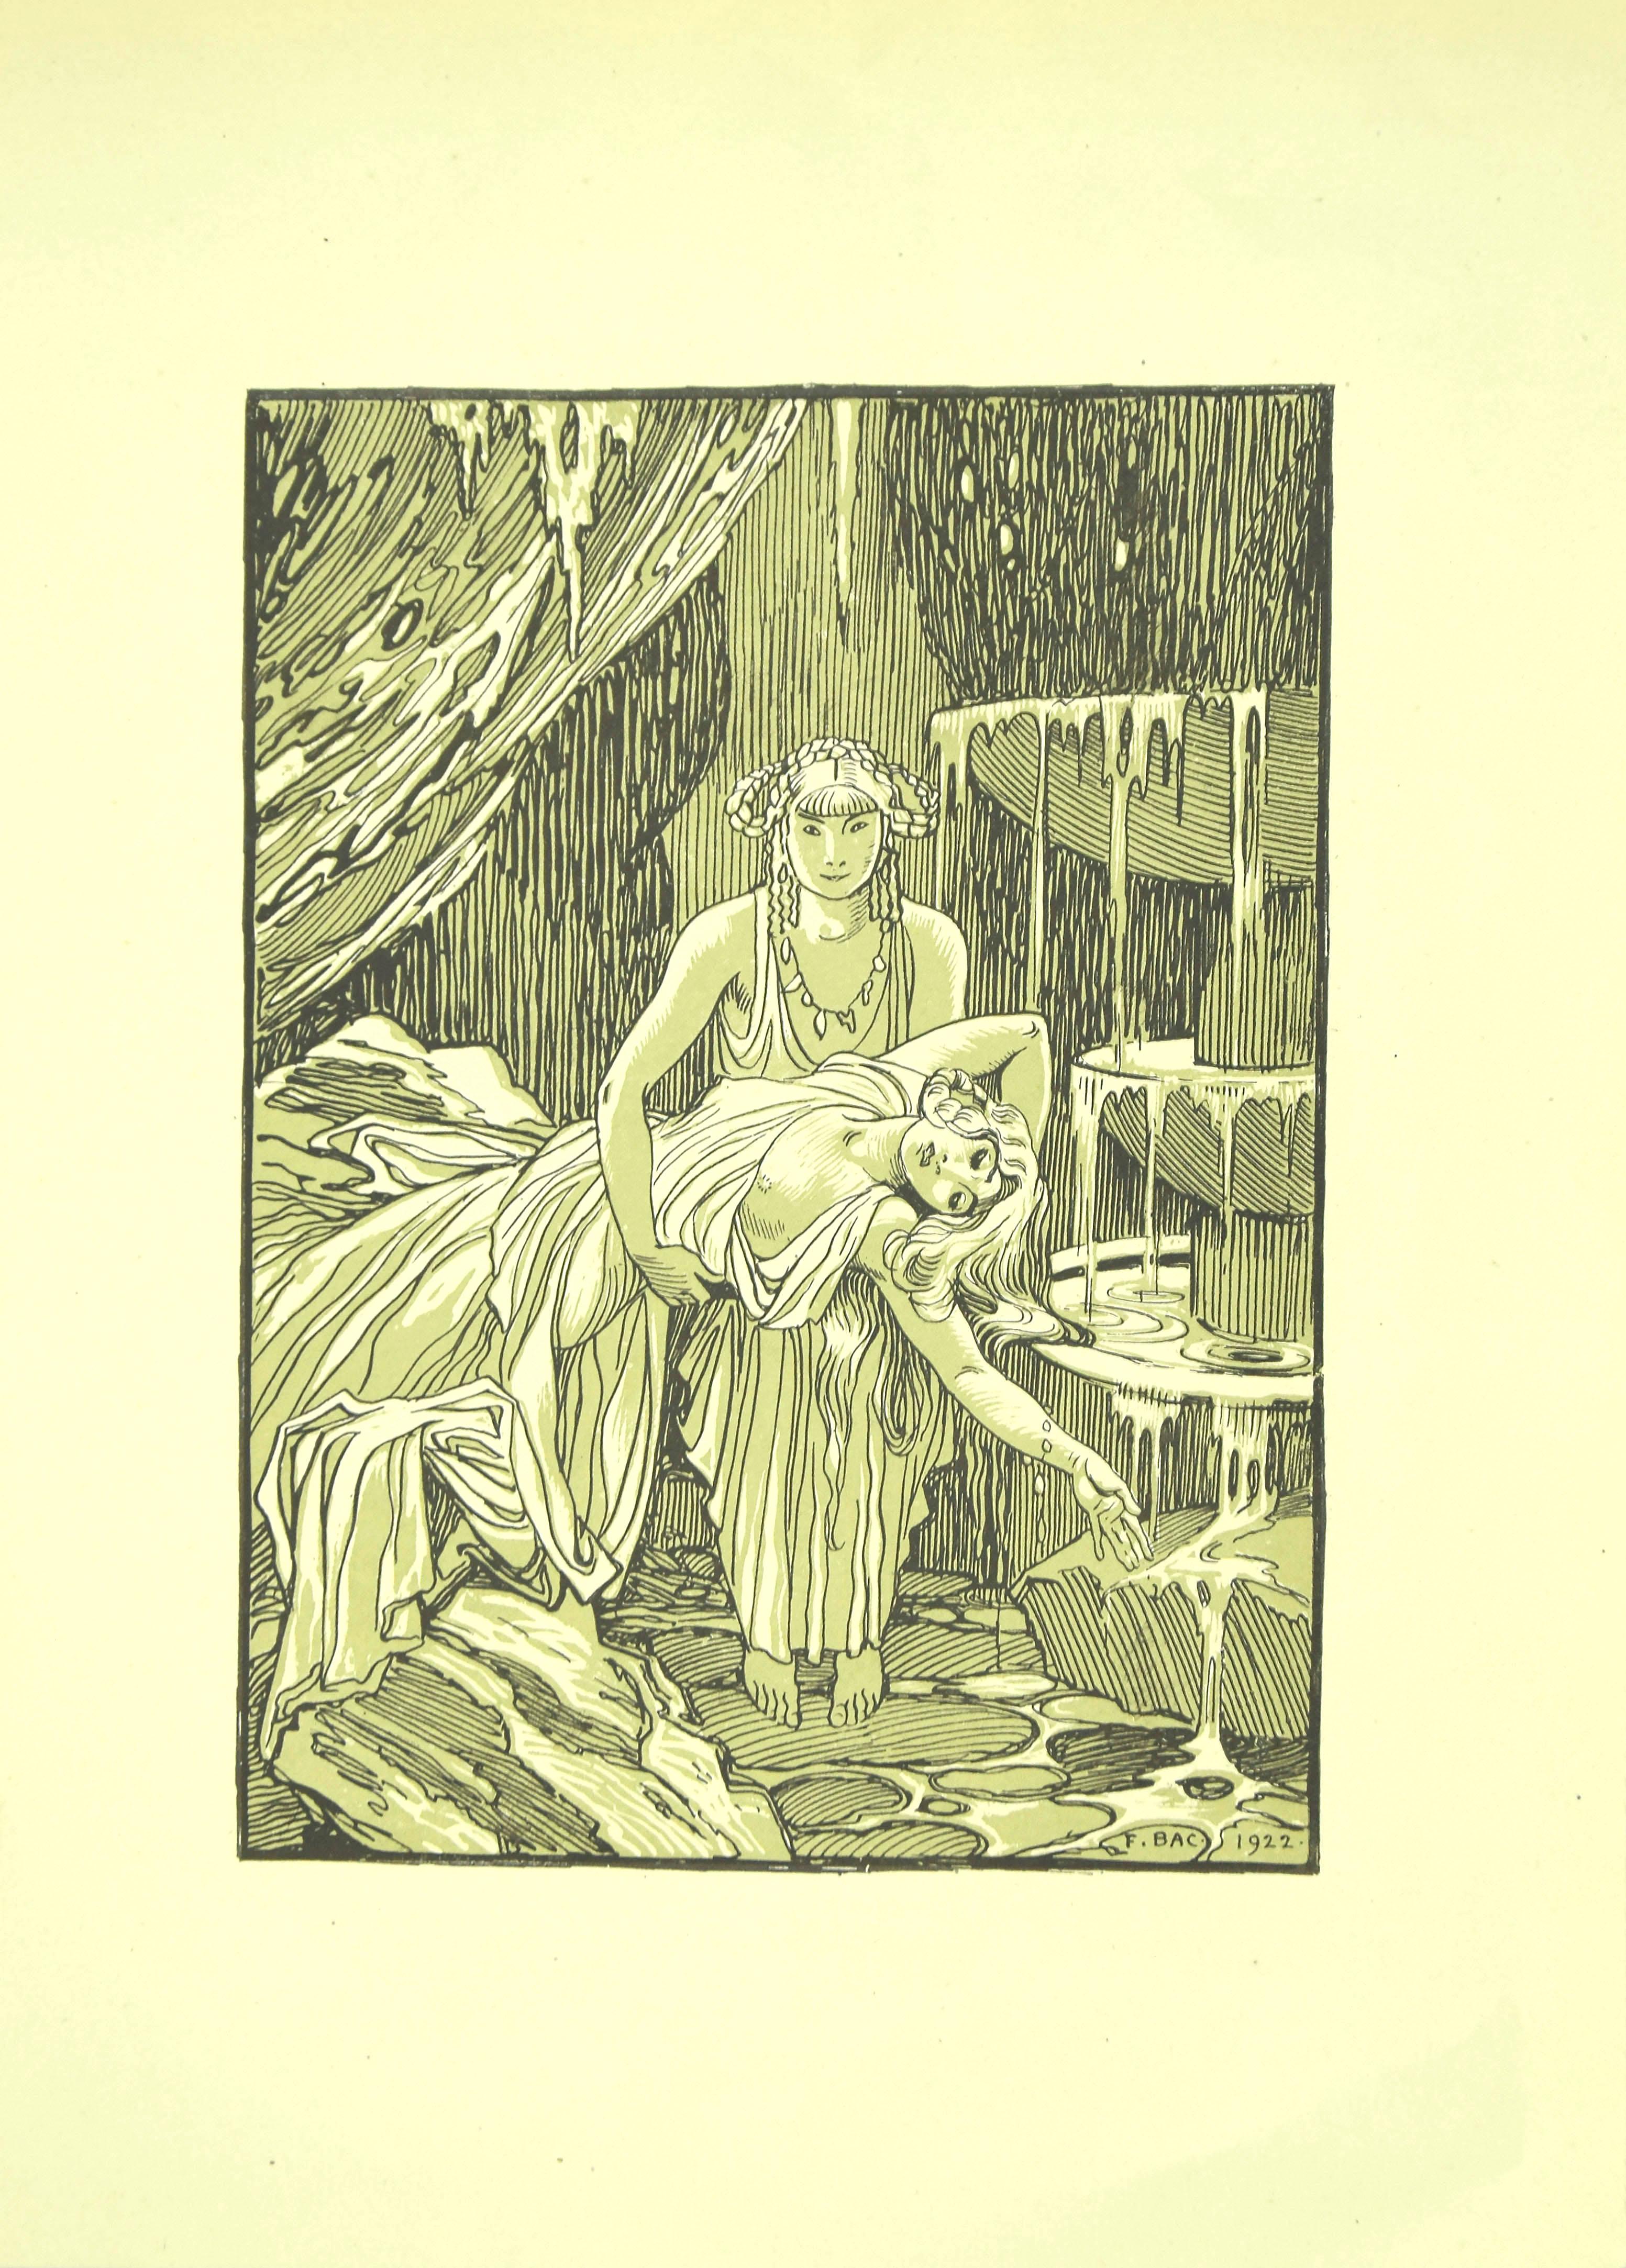 Ferdinand Bac Figurative Print - The Fountain - Original Lithograph by F. Bac - 1922